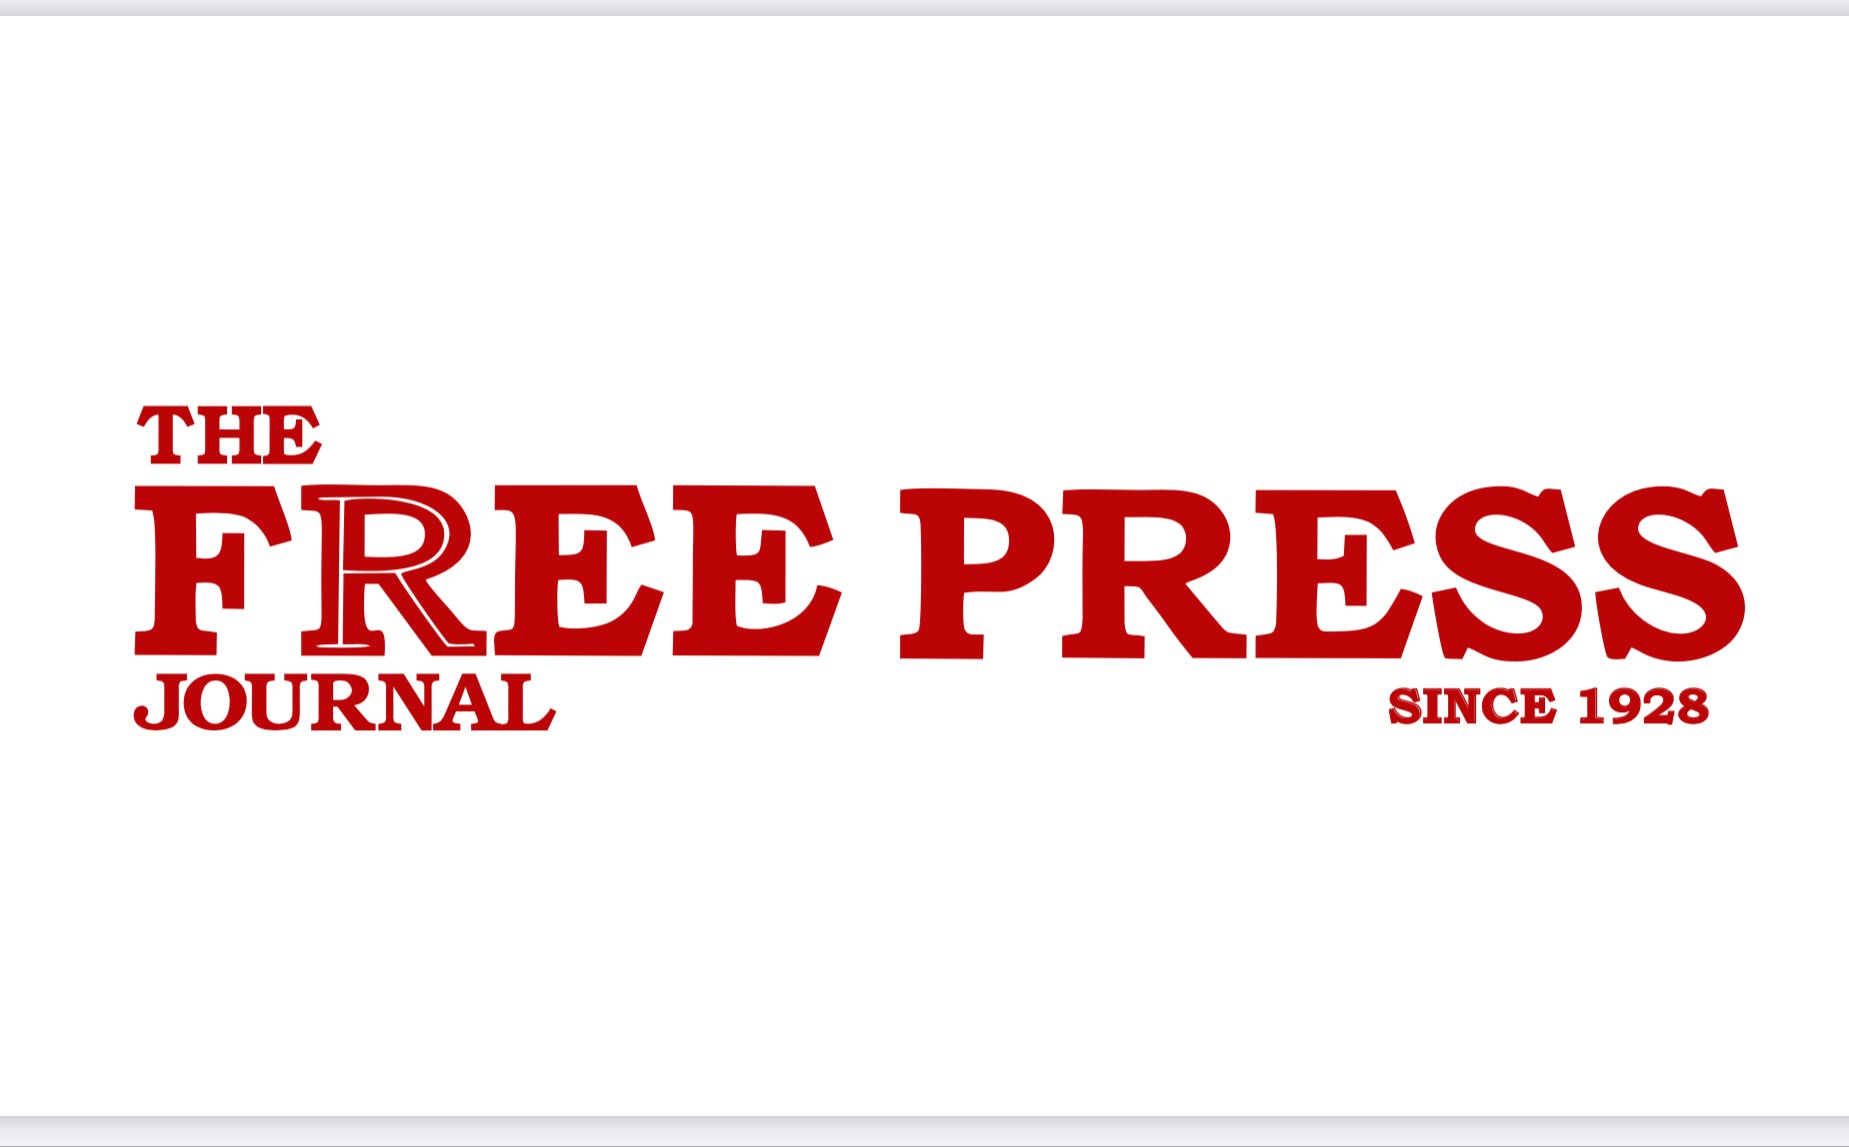 Newspaper Media Free Press Journal Advertising in Mumbai